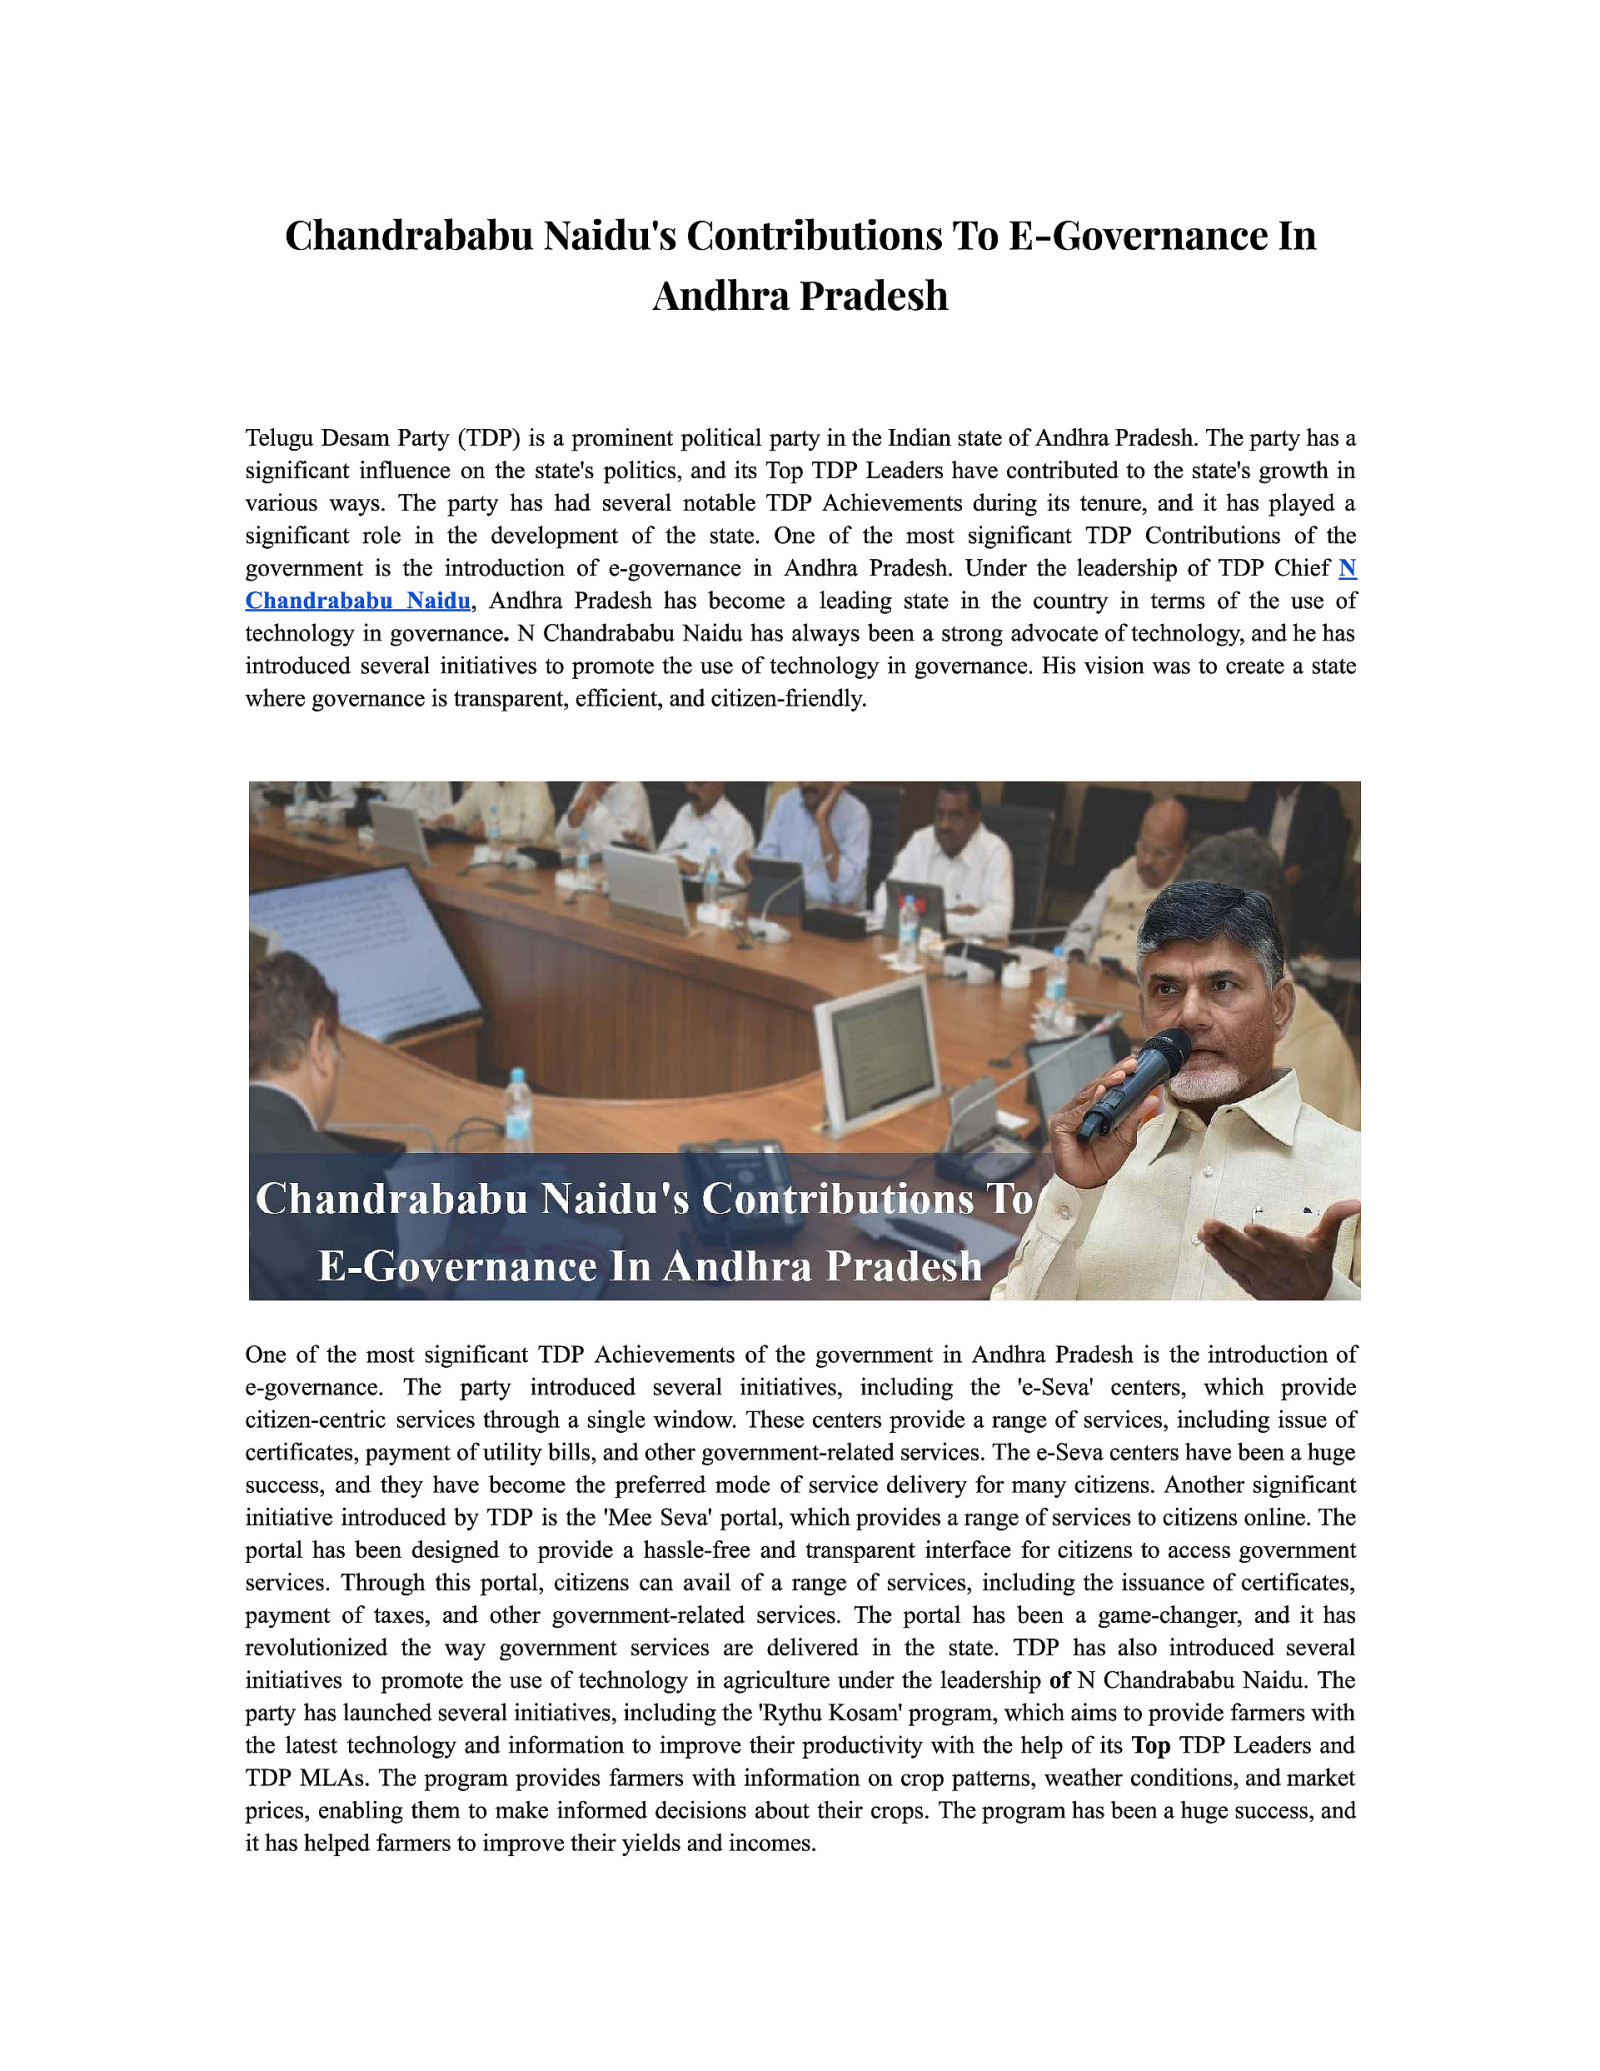 Chandrababu Naidu’s Contributions To E-Governance In Andhra Pradesh